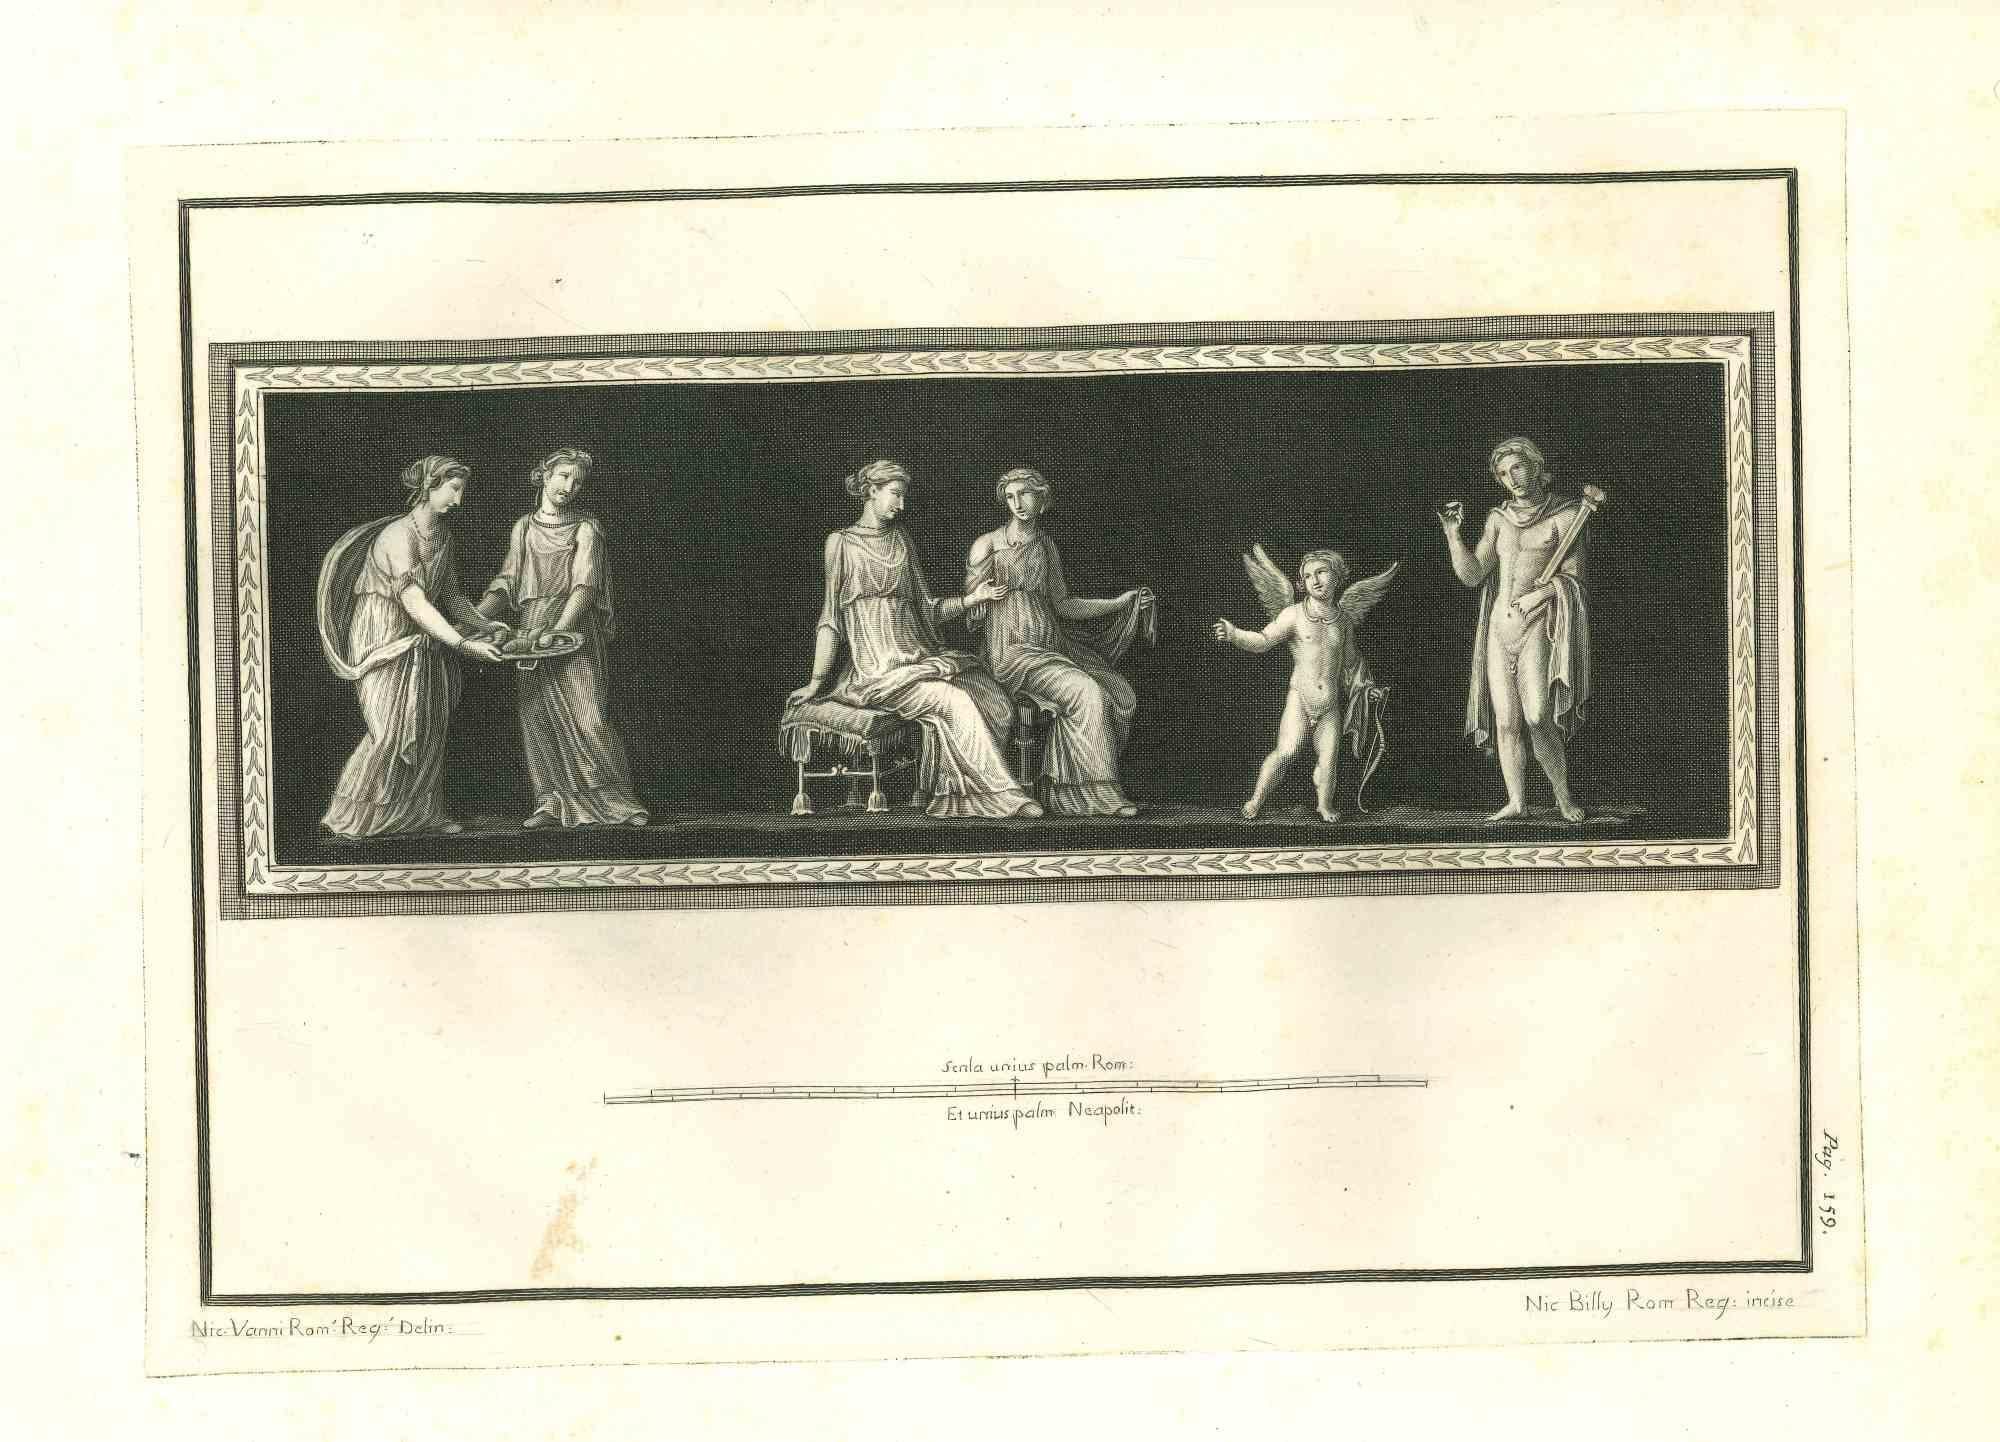 Nic Billy, Nic. Vanni Figurative Print - Ancient Roman Painting - Original Etching by N. Billy, N. Vanni - 18th Century